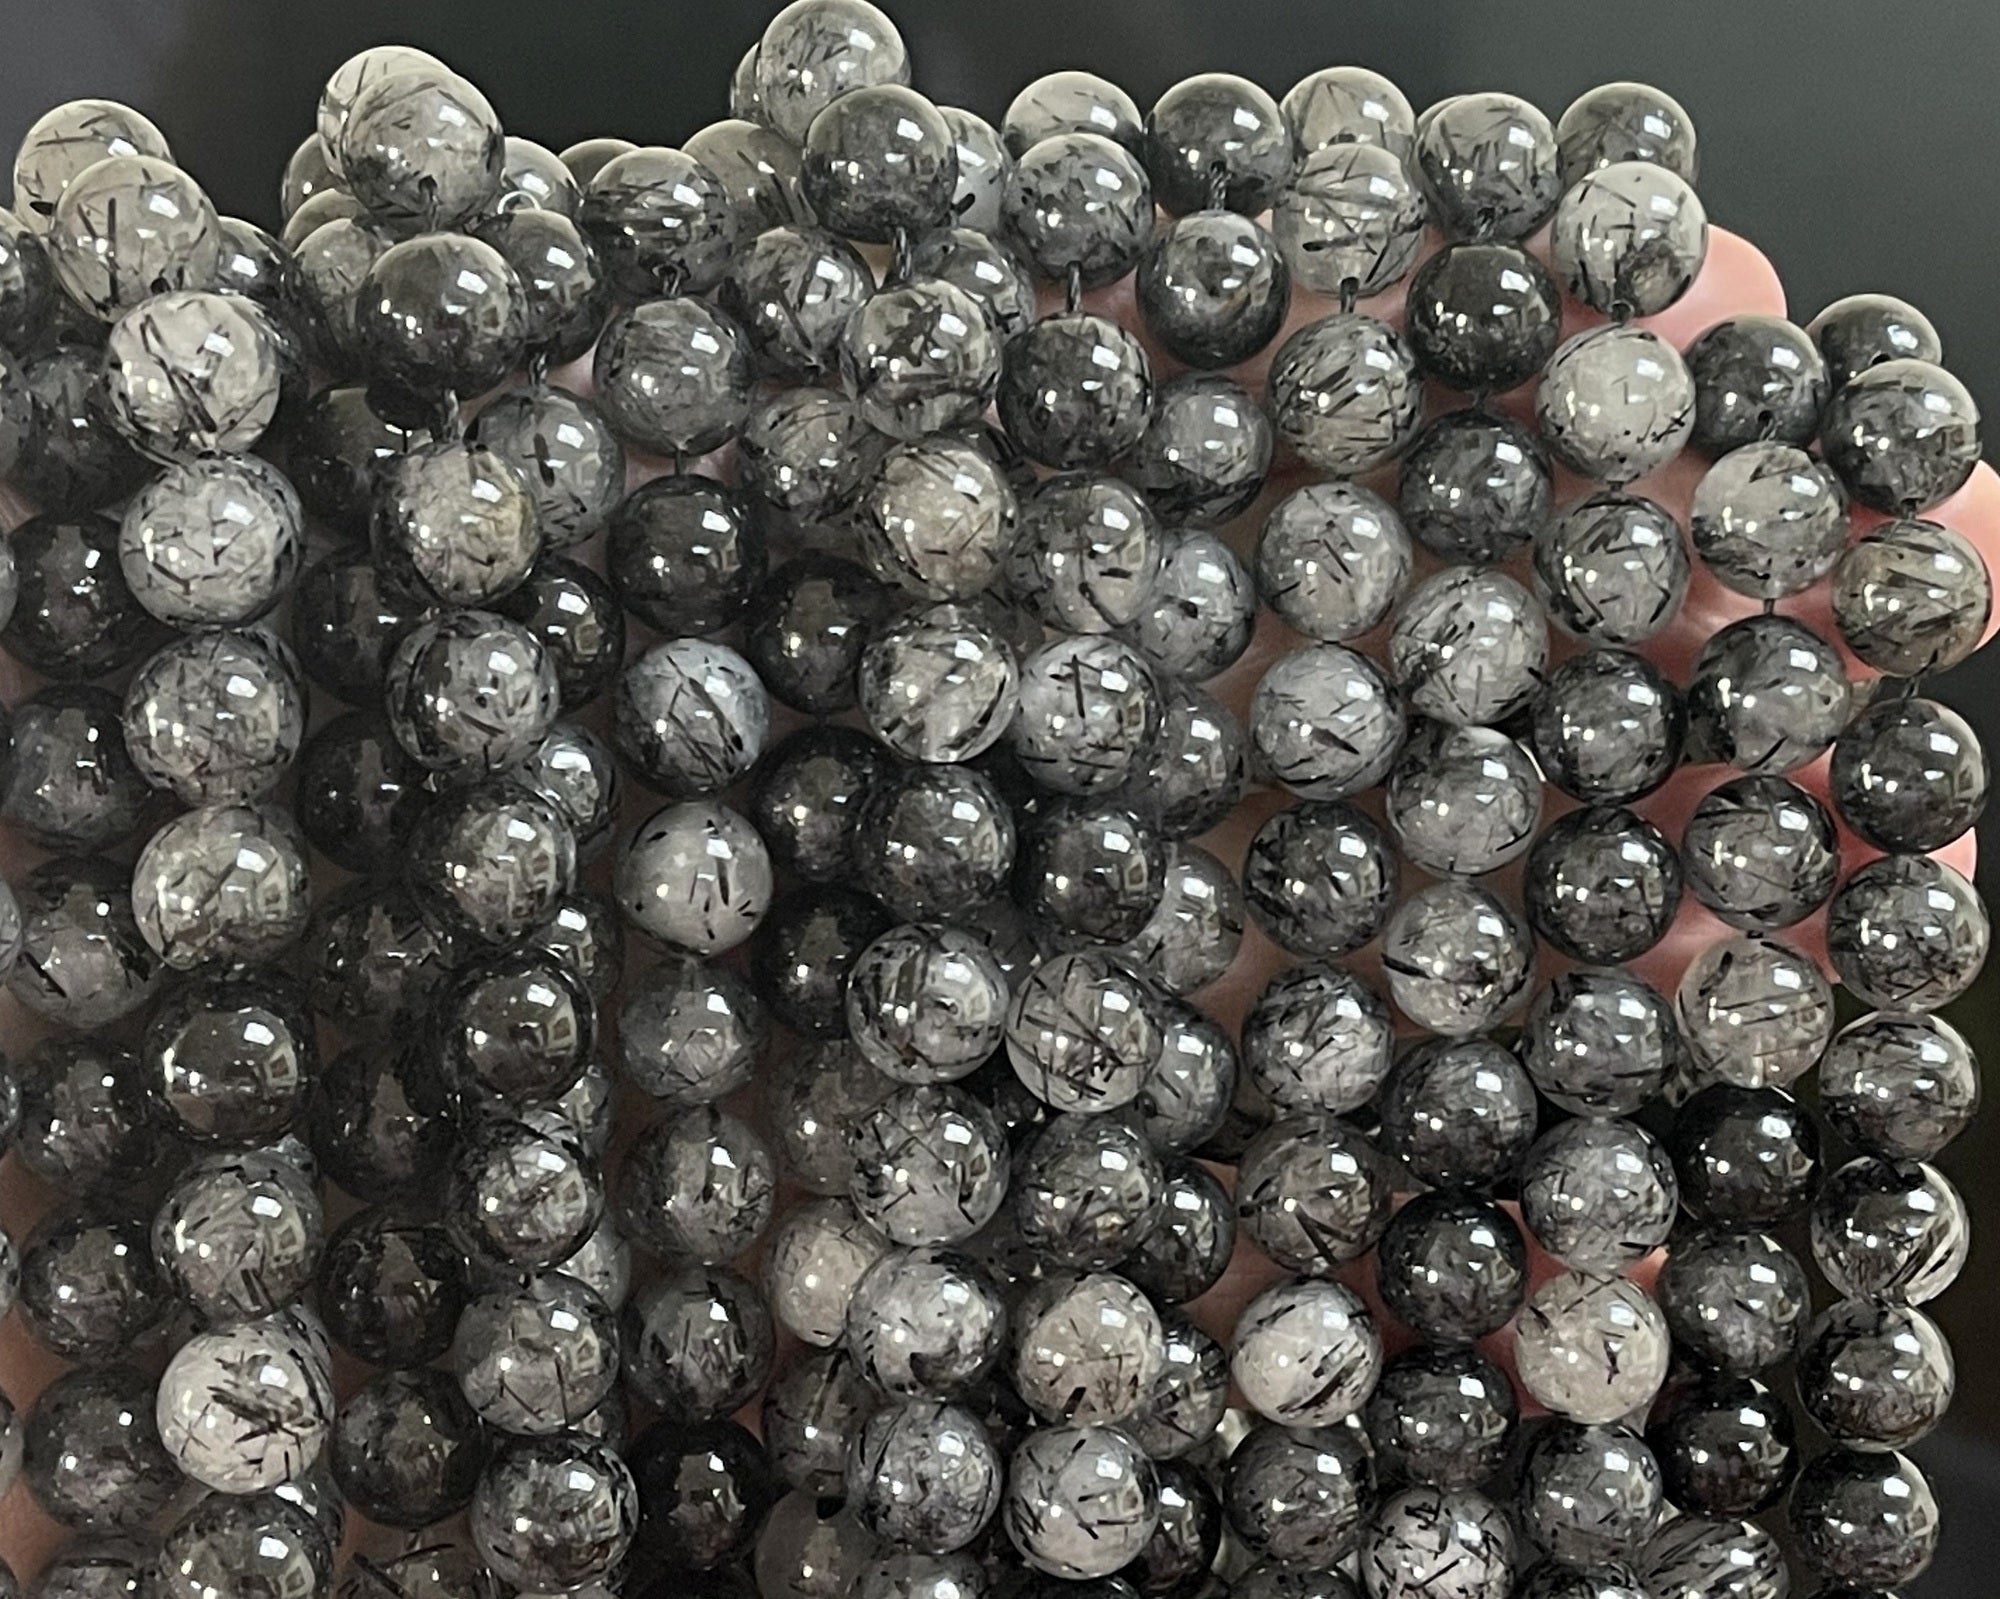 Black Tourmaline Rutilated Quartz 10mm round natural gemstone beads 15" strand